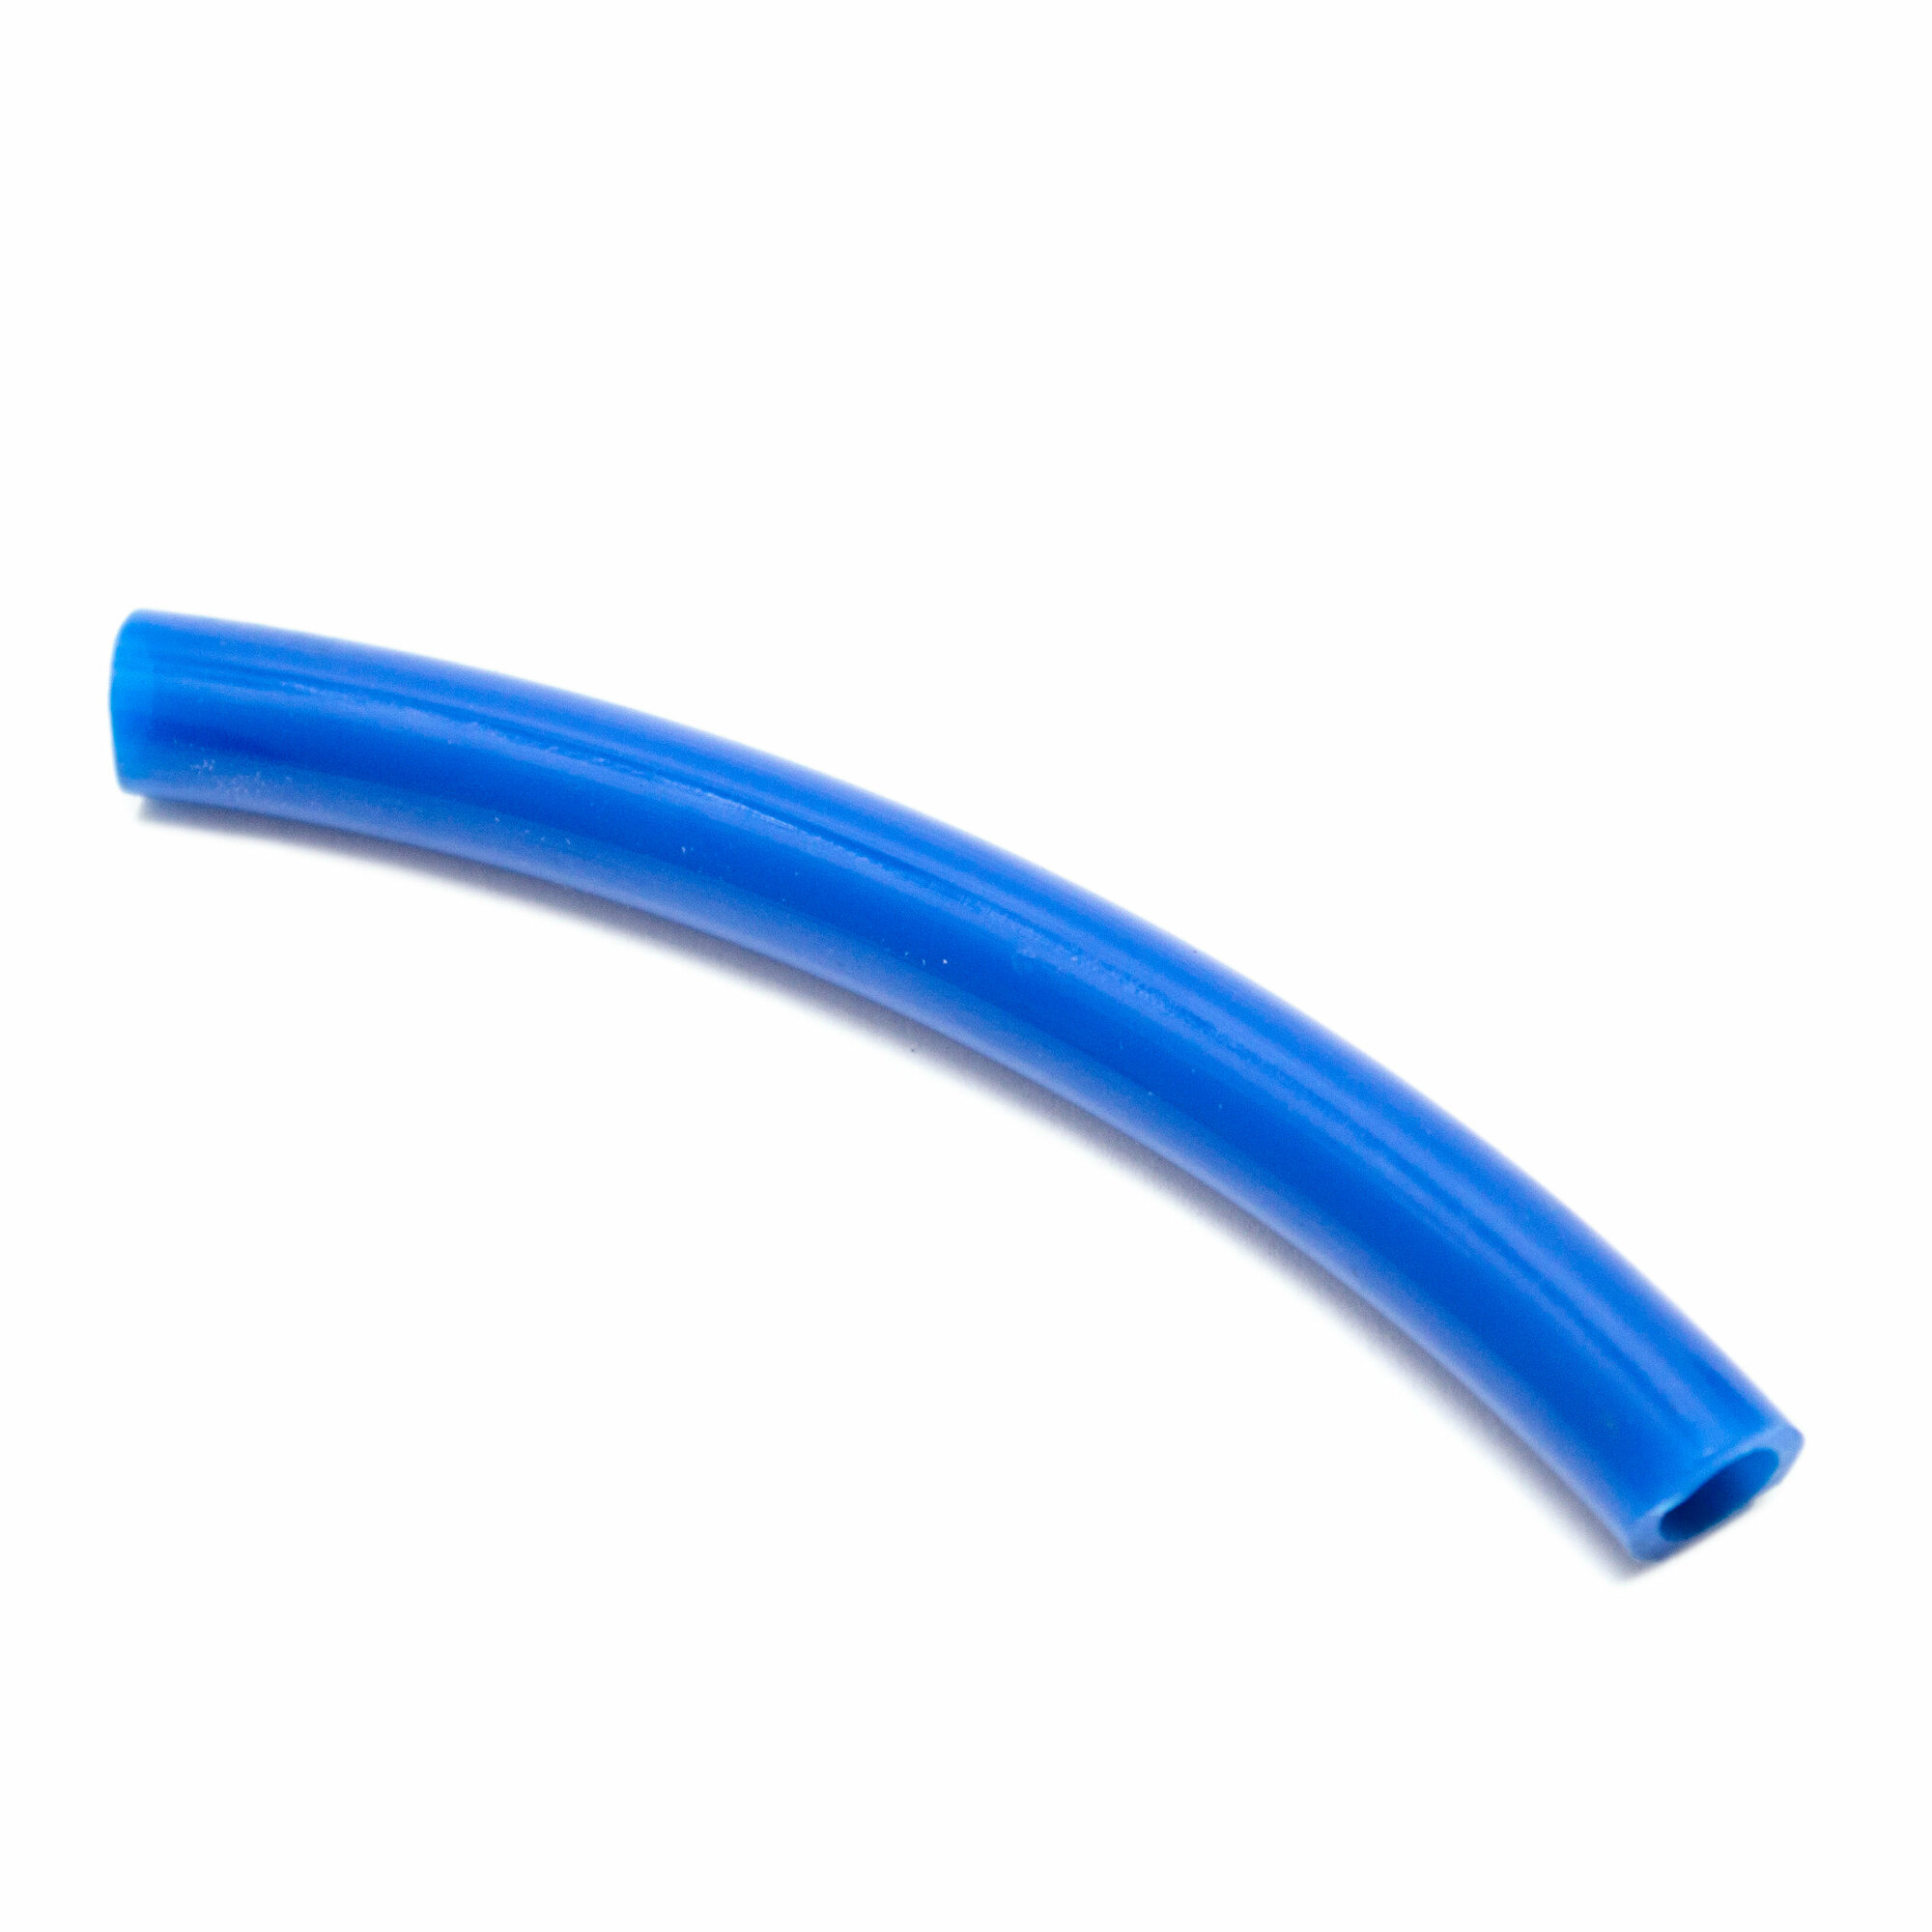 Шланг ПВХ синий пищевой (2 метра), толщина стенки: 2 мм; внутренний диаметр: 6 мм.